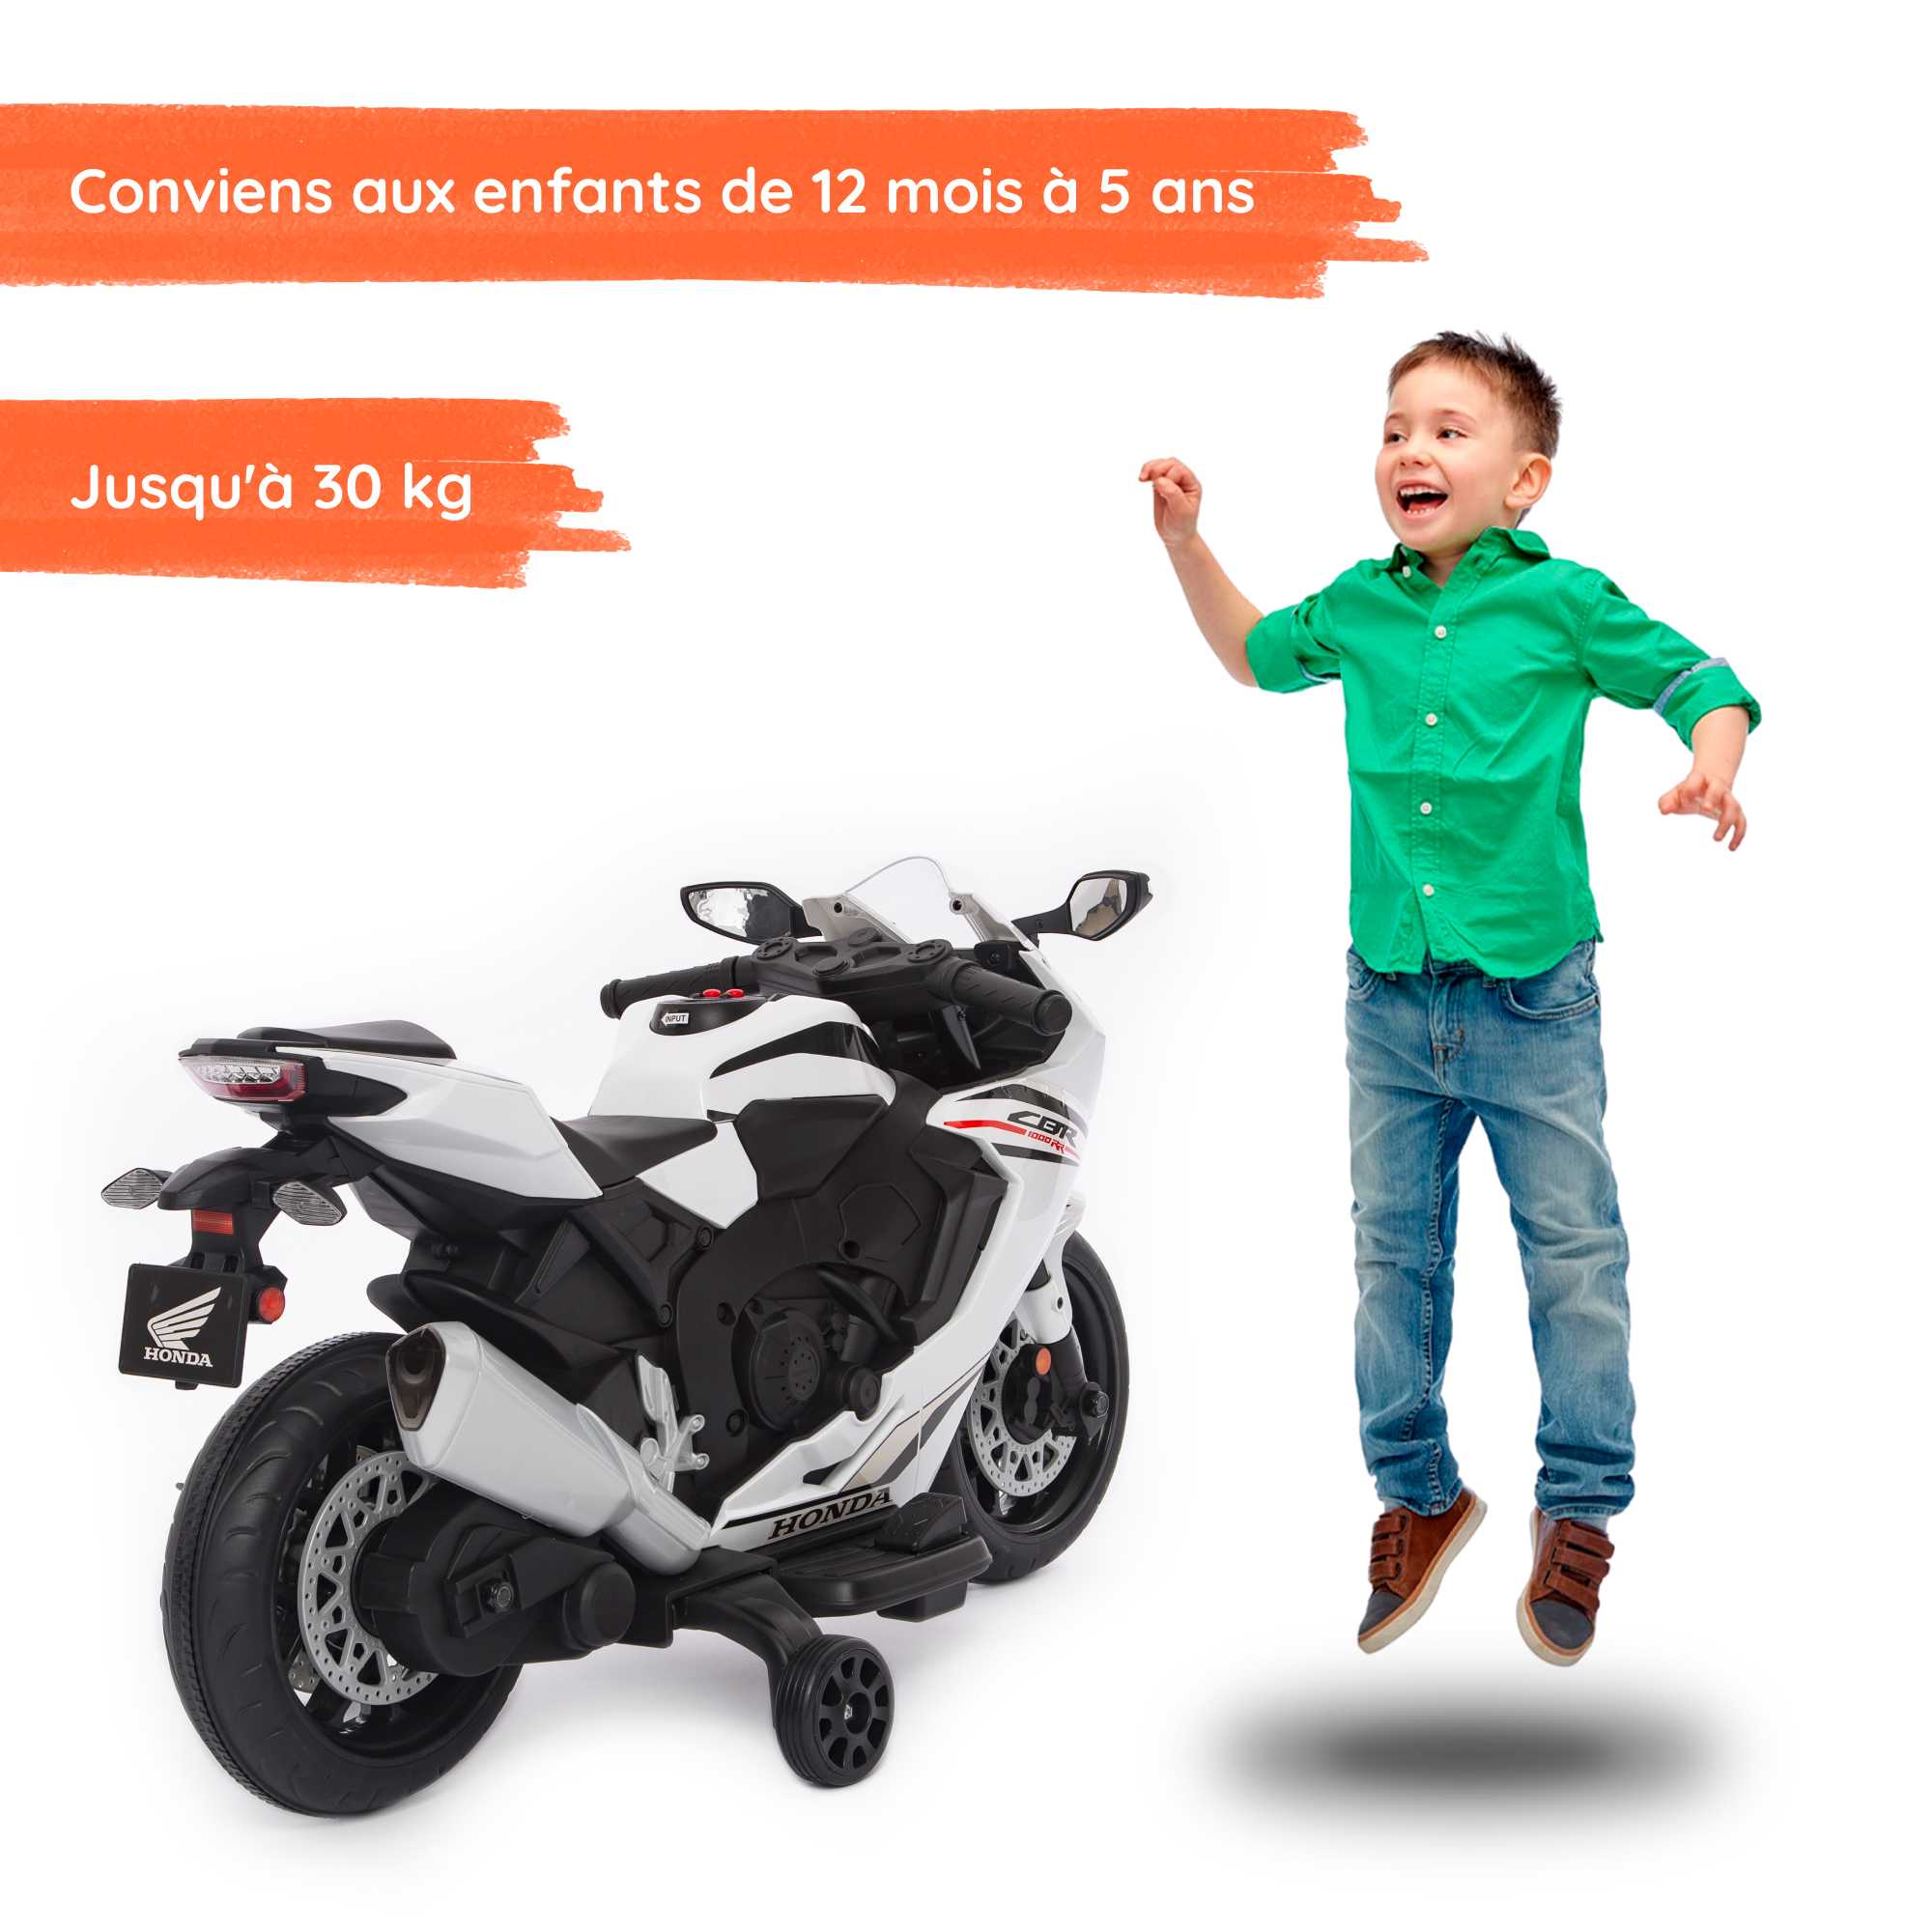 Honda CBR 1000 blanc avec enfant 